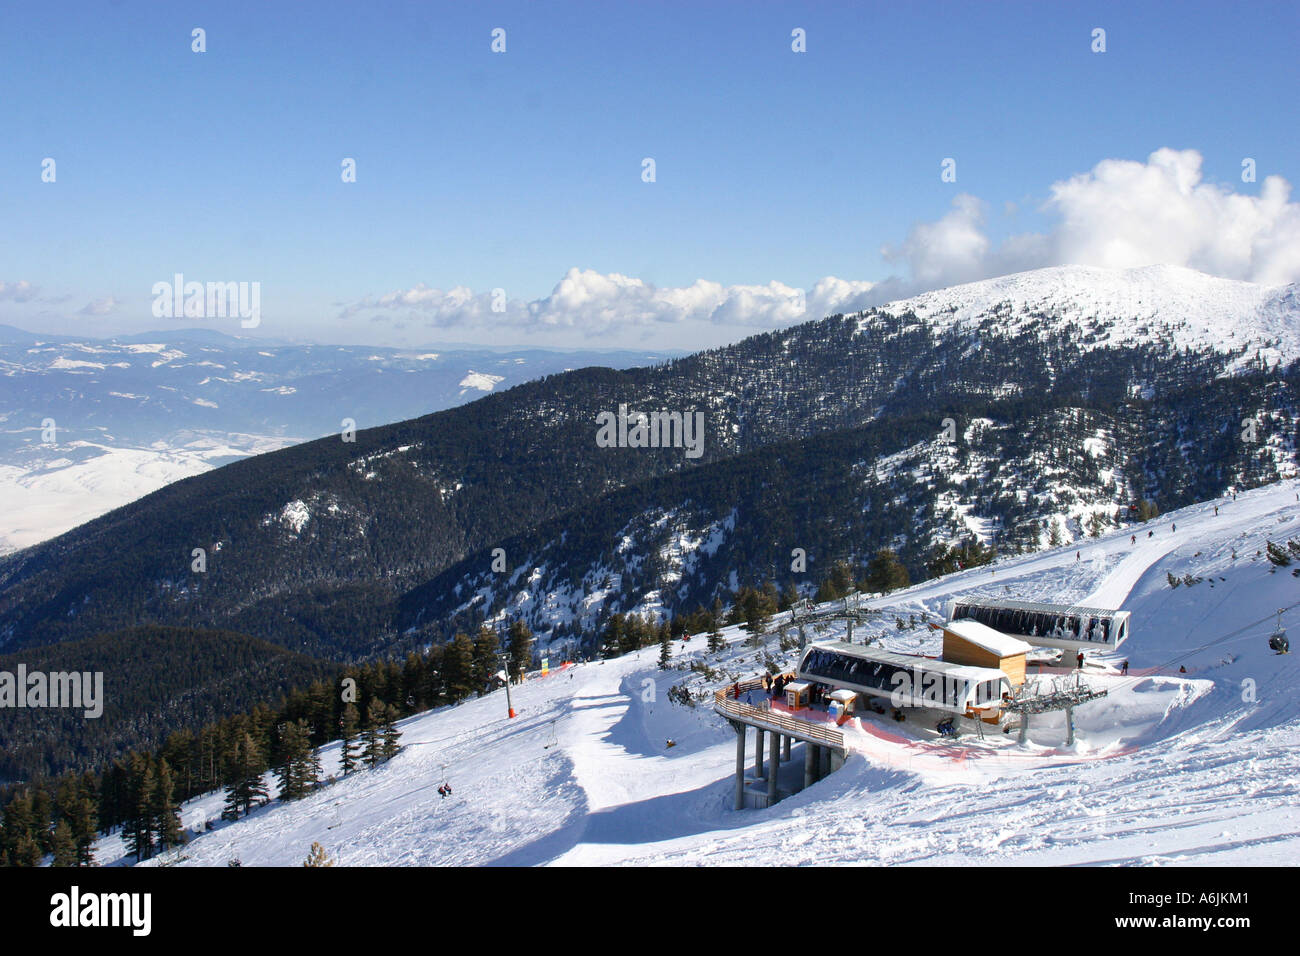 Middle station of chair ski lift at Bansko Bulgaria Stock Photo - Alamy